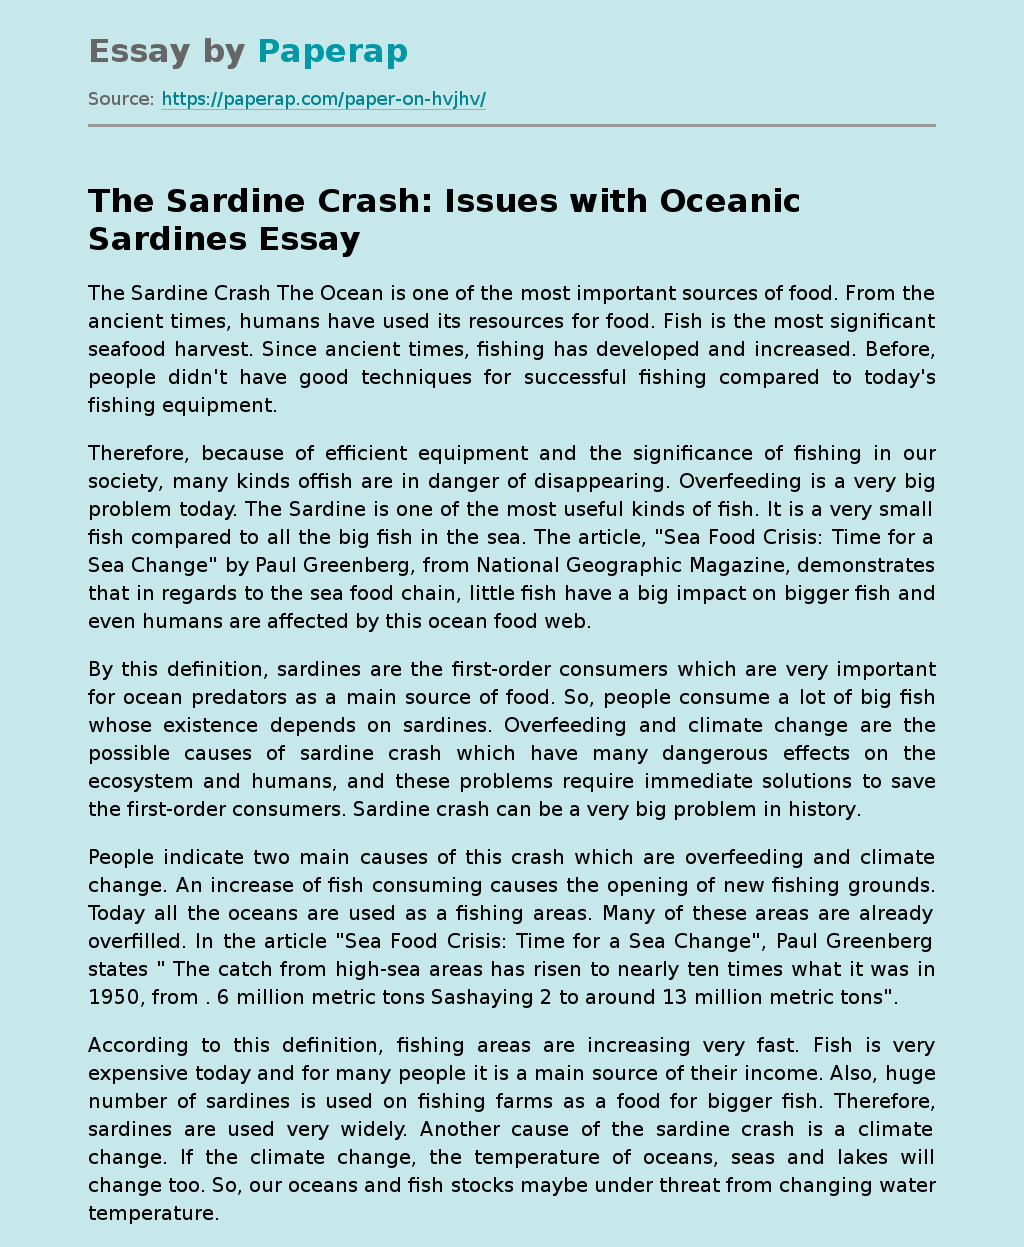 The Sardine Crash: Issues with Oceanic Sardines